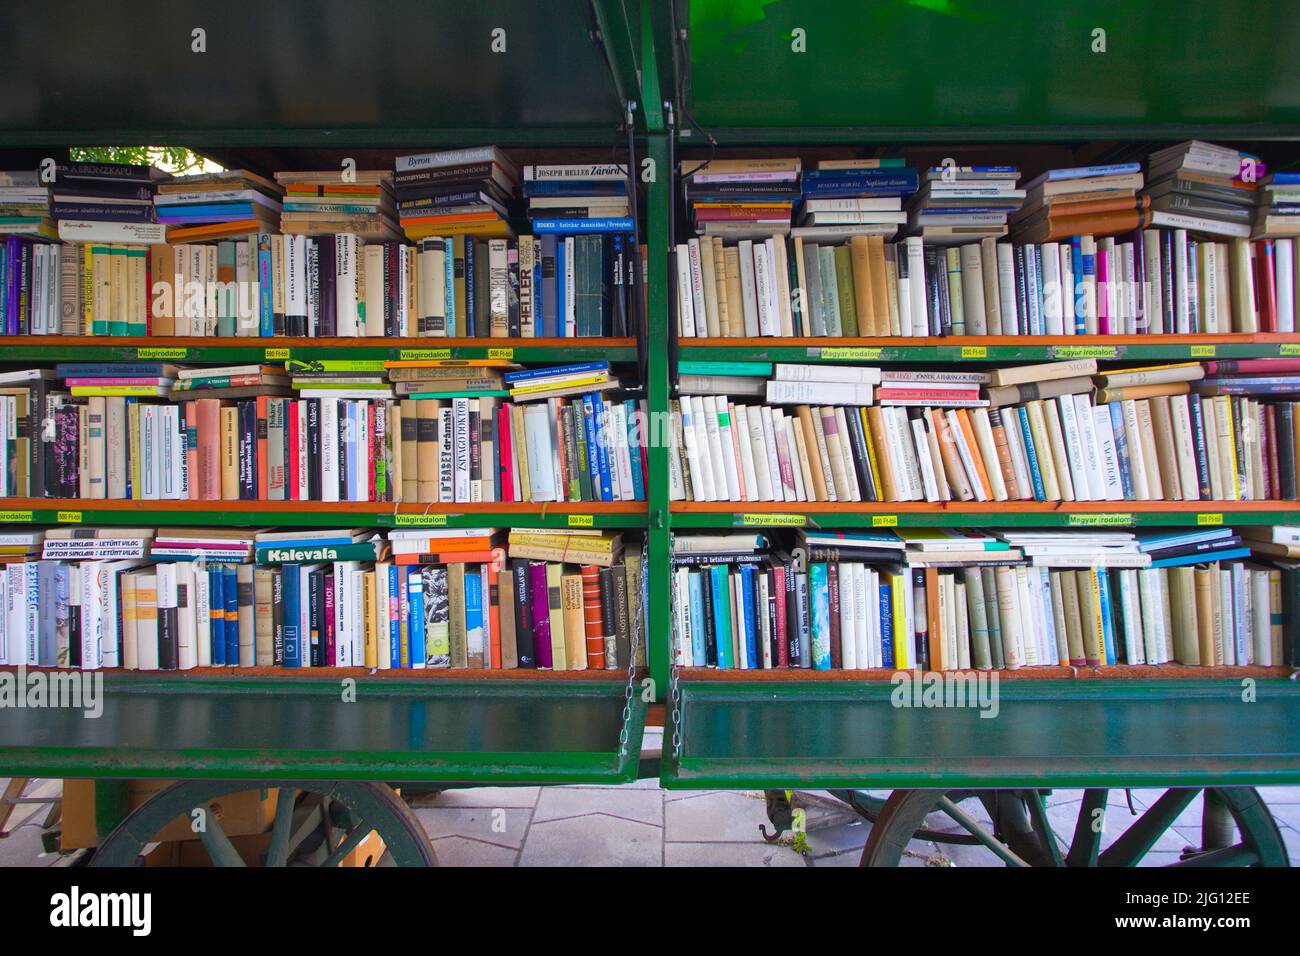 Hungary, Budapest, book cart, street bookseller, books, Stock Photo